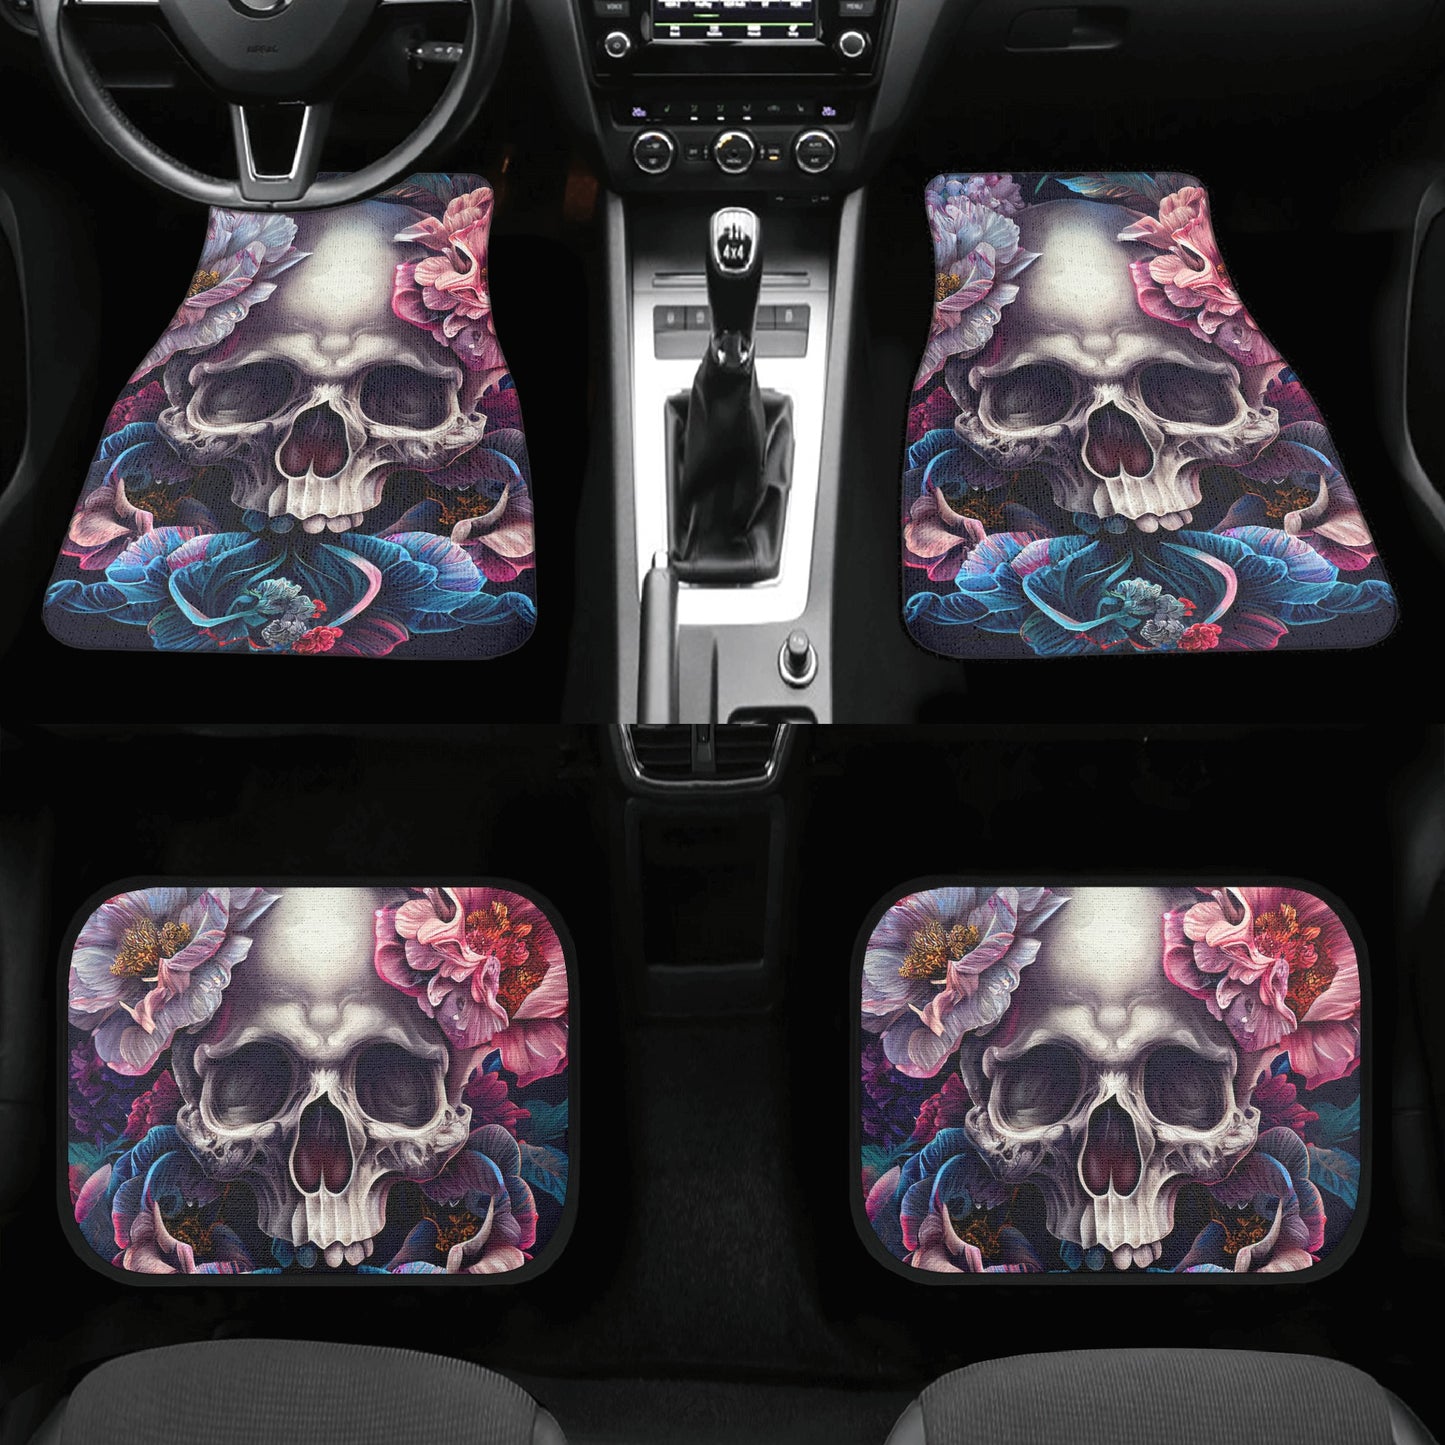 Flower skull car seat cover full set, flame skull mat for car, biker skull car mat, flower skull truck seat cover, gothic skull cover cushio Car Floor Mats